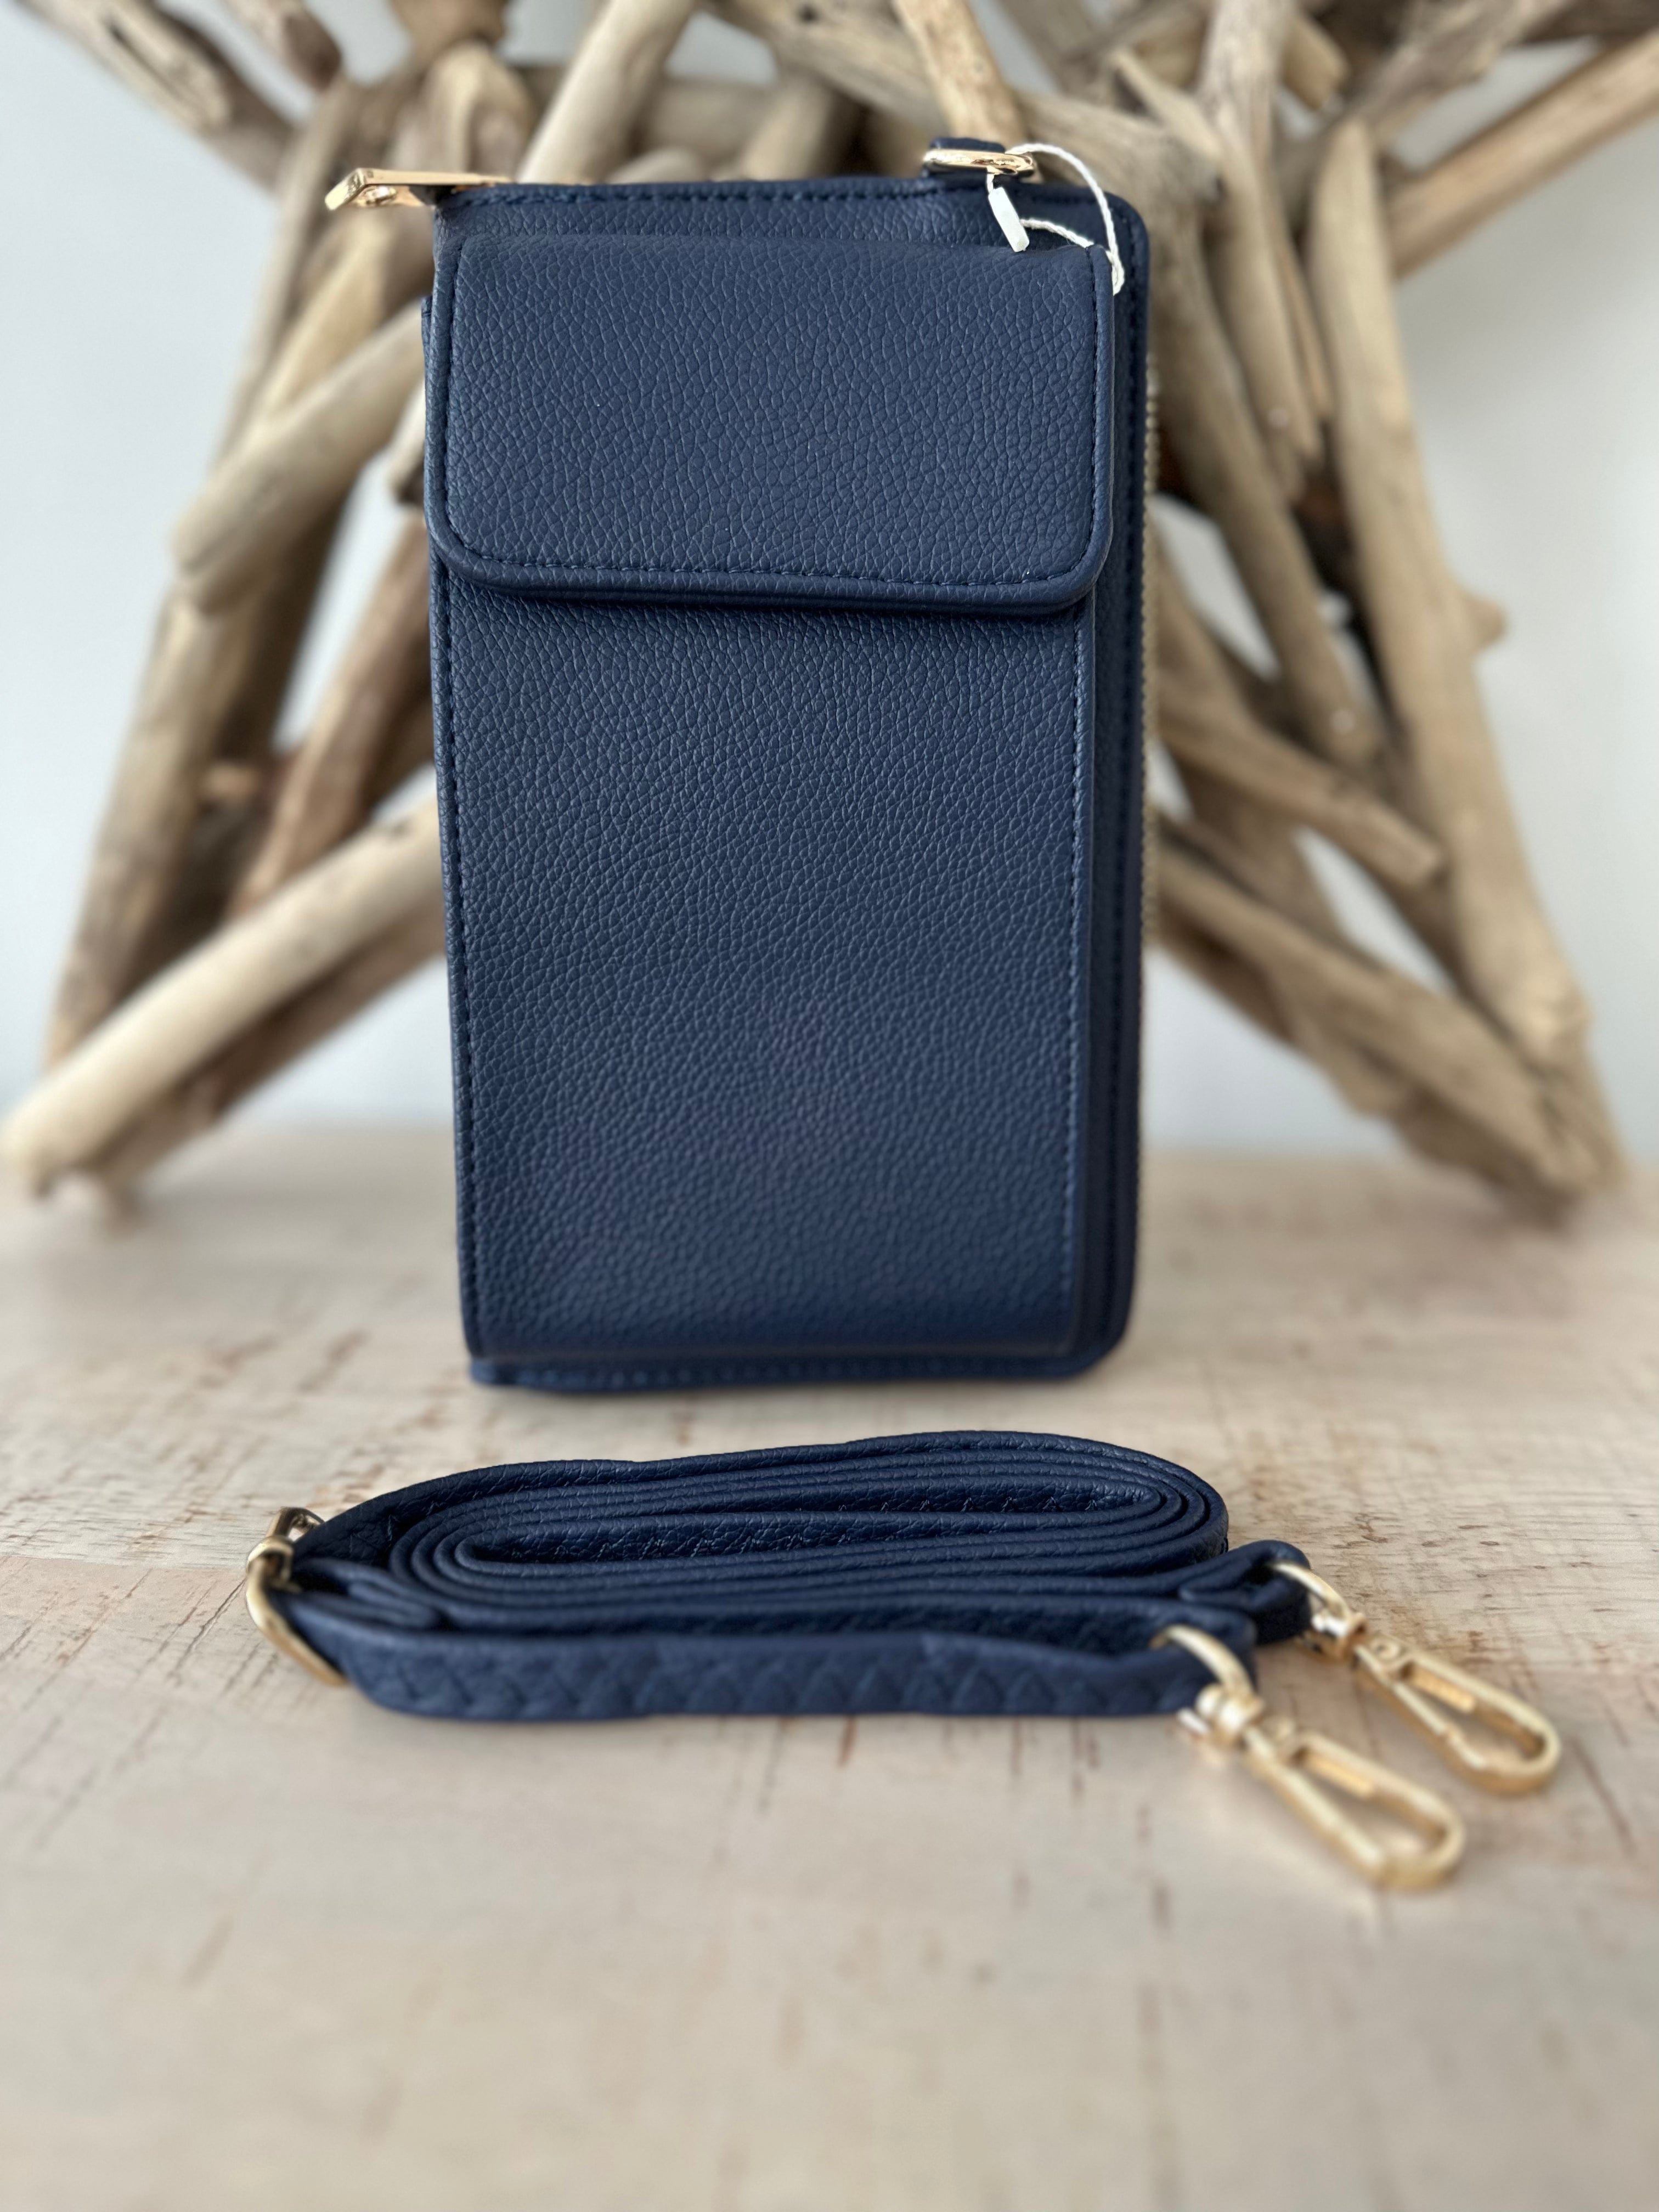 lusciousscarves Handbag & Wallet Accessories Navy Phone / Purse Crossbody Bag